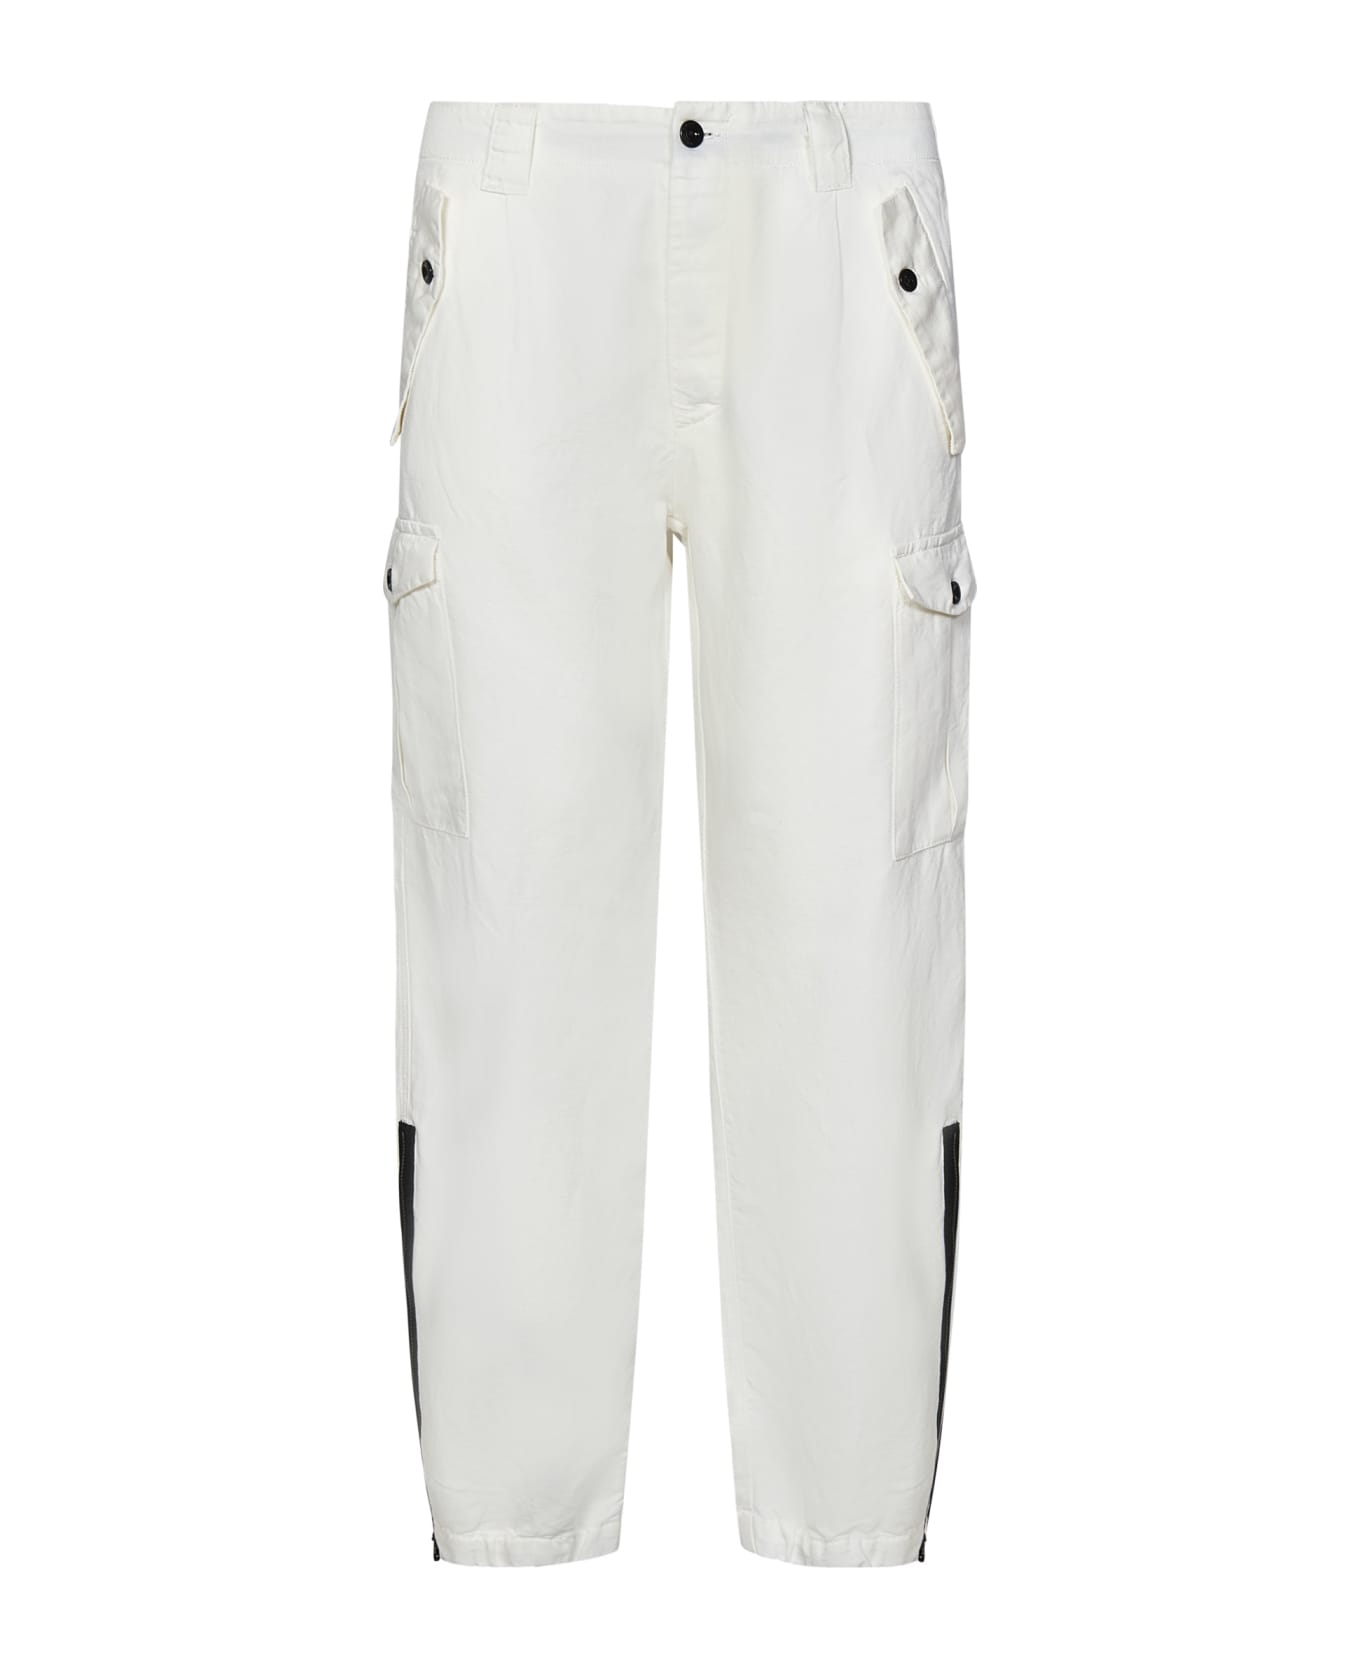 C.P. Company Trousers - White ボトムス